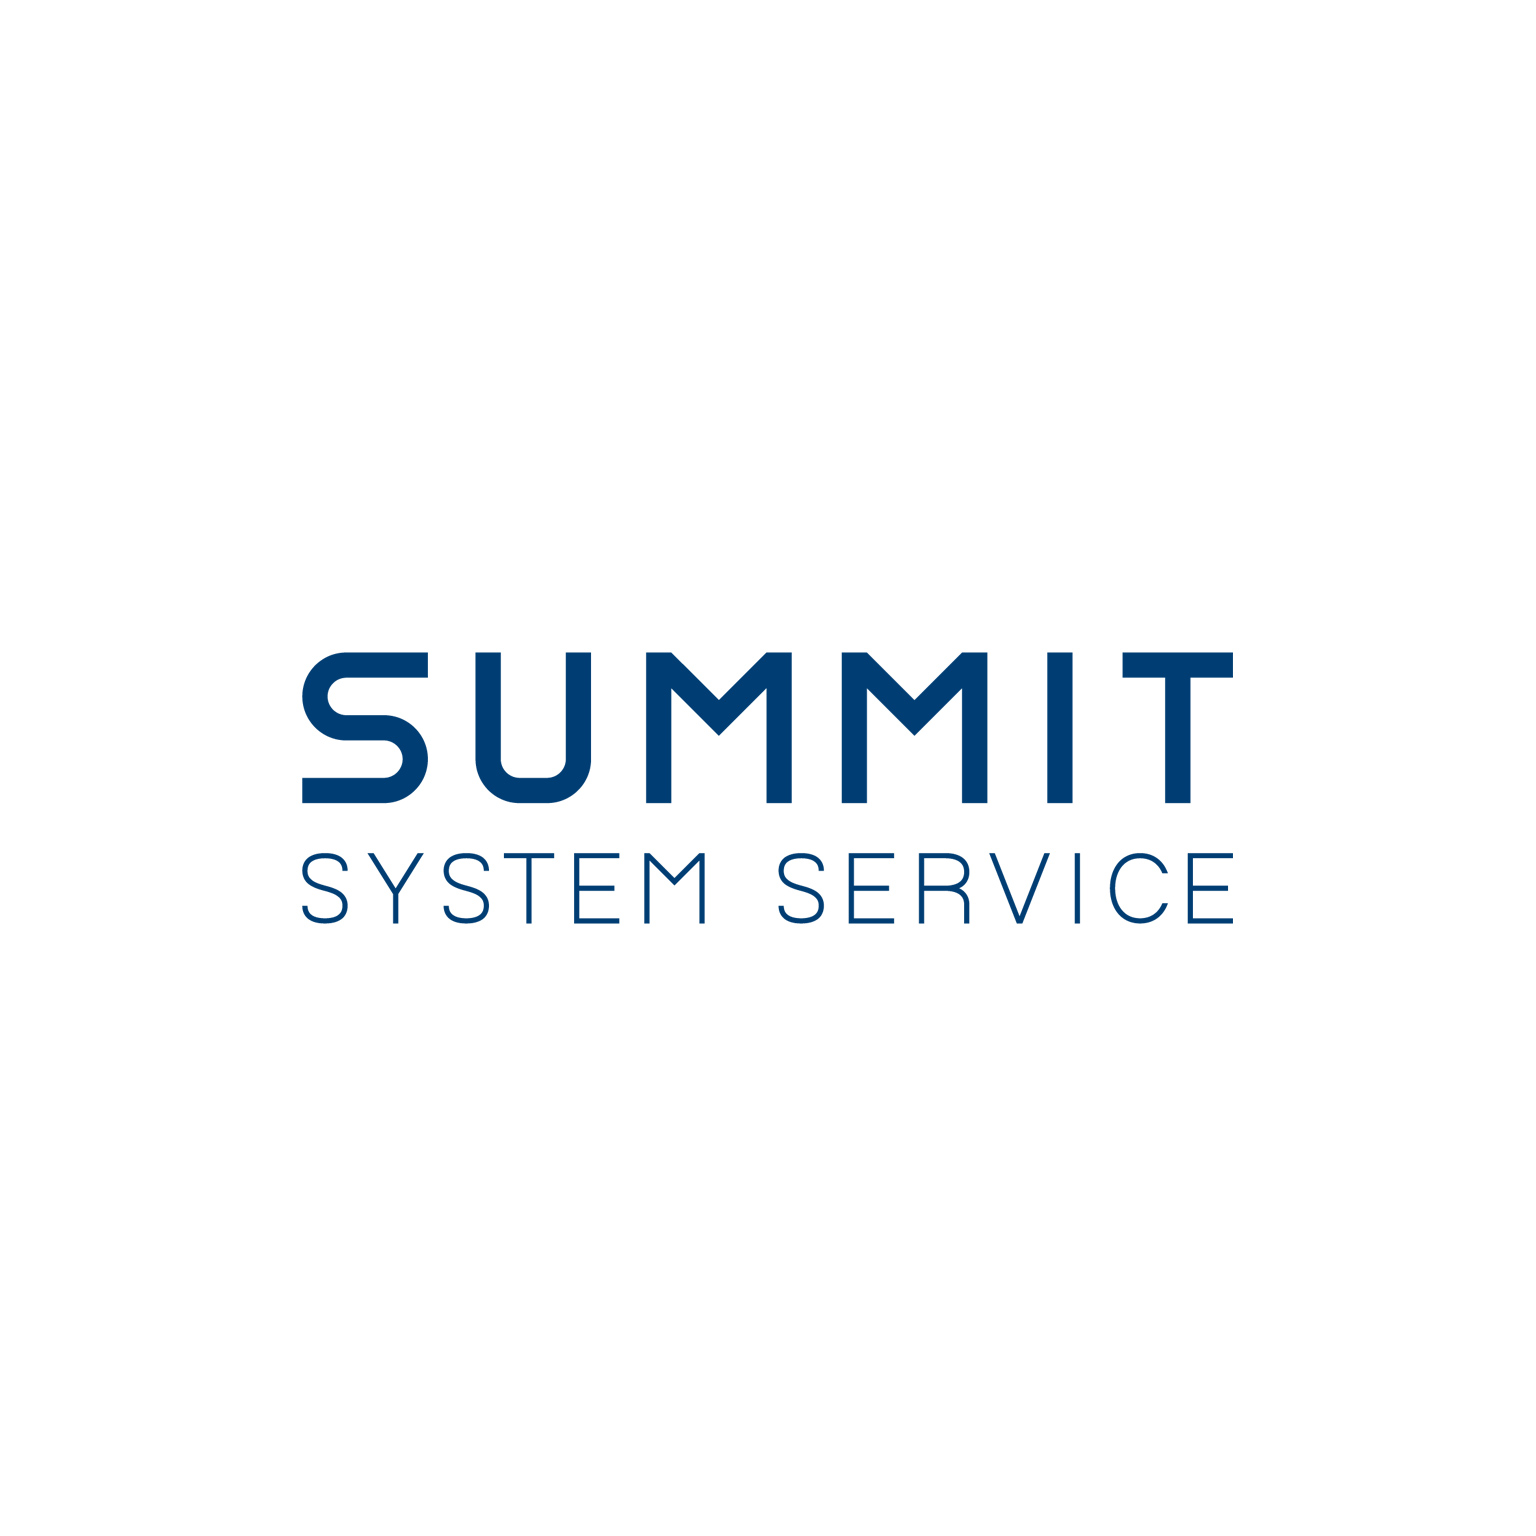 SUMMIT System Service Logo